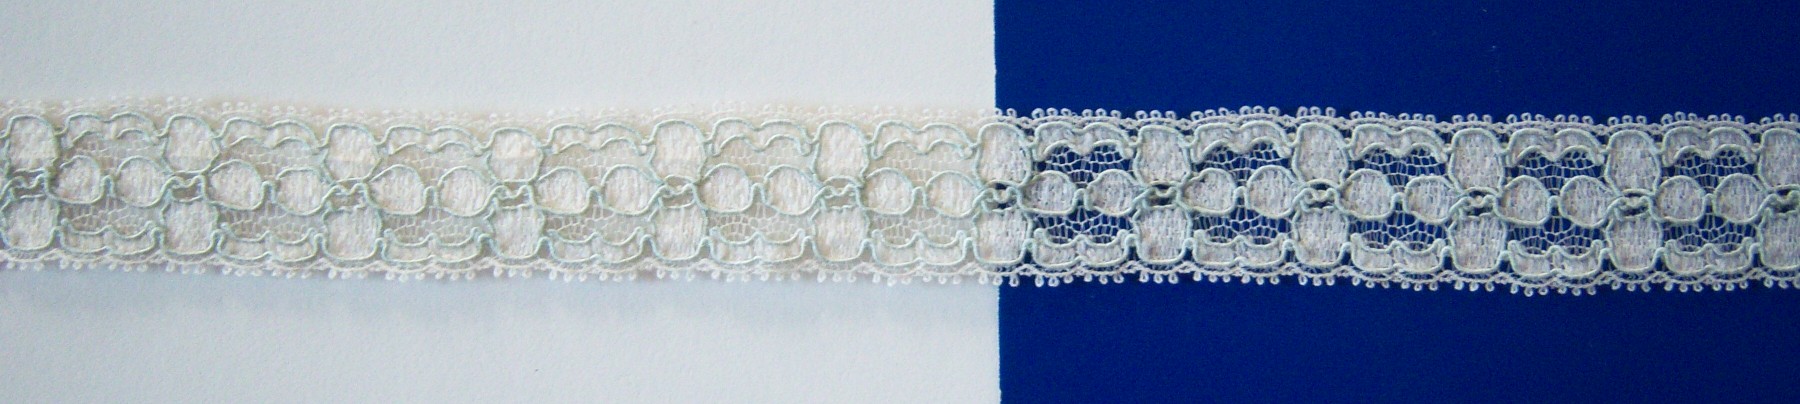 Pearl/Mint #5489 Nylon 3/4" Lace